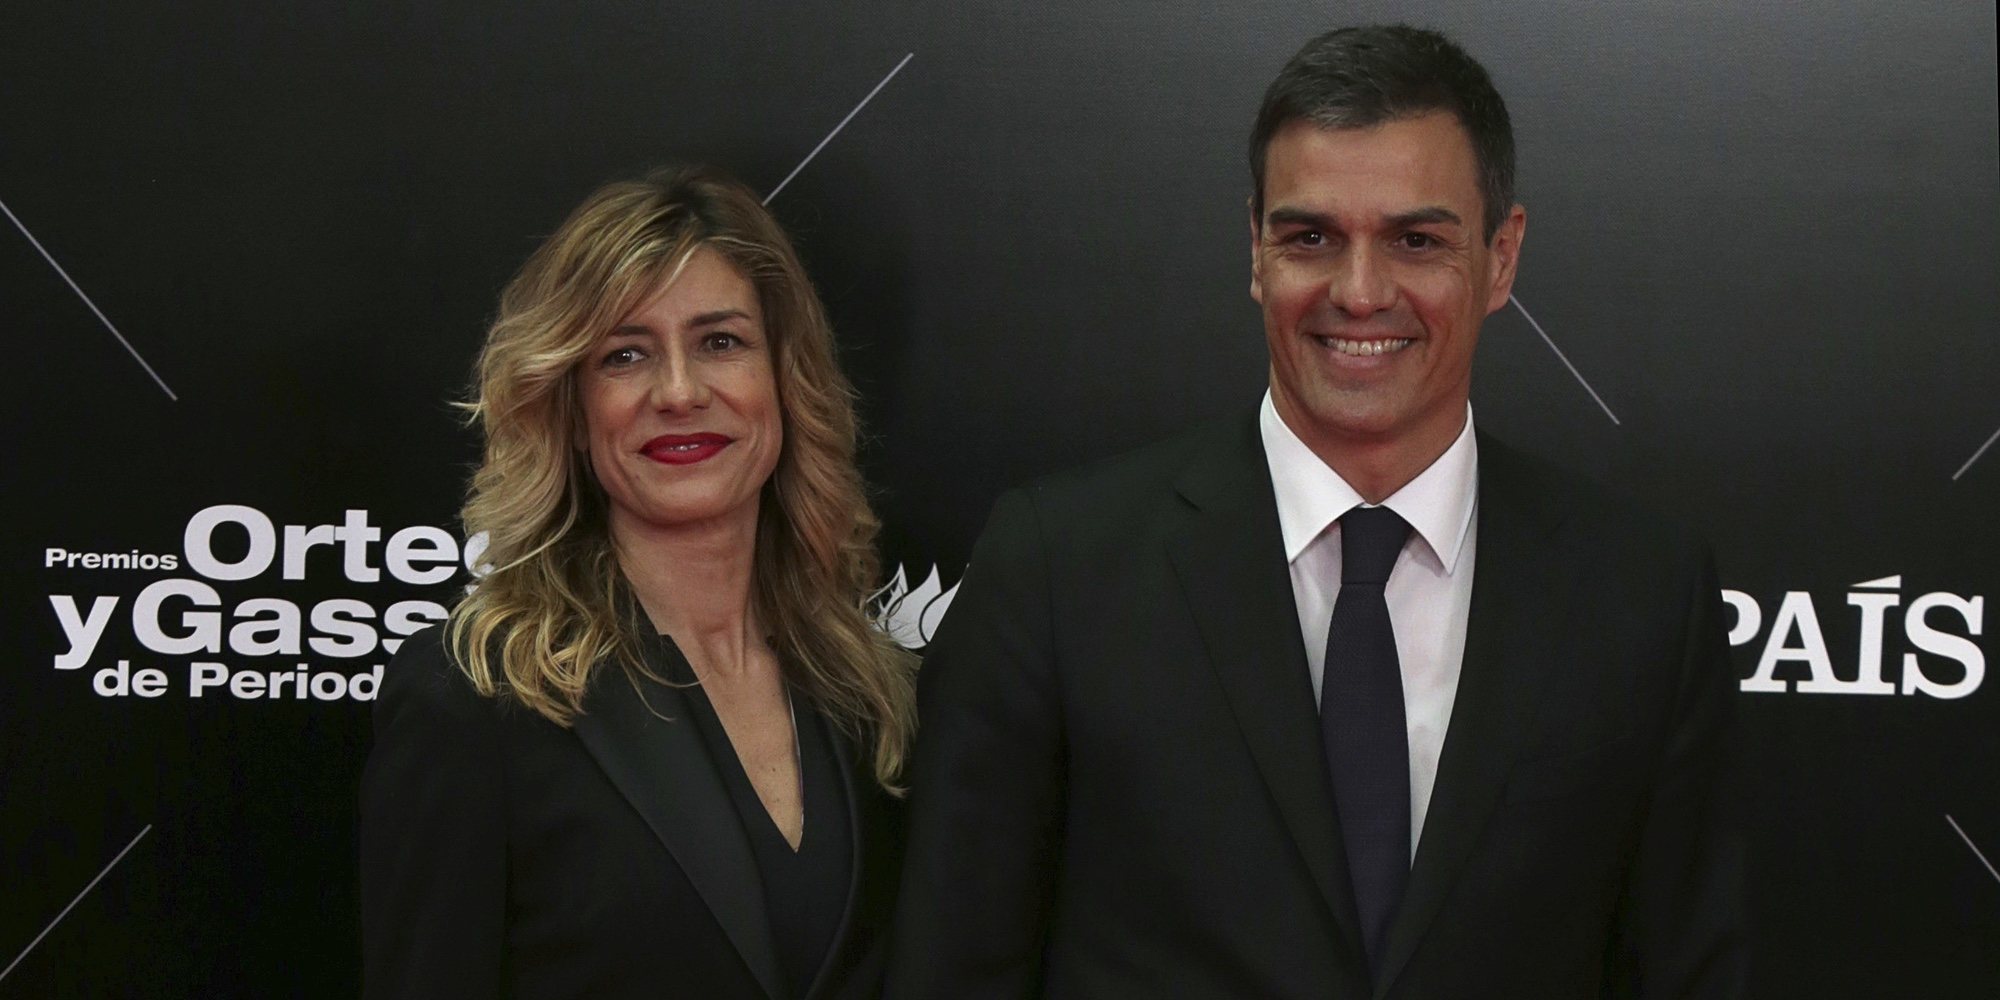 Begoña Gómez, mujer del Presidente de España Pedro Sánchez, positivo en coronavirus